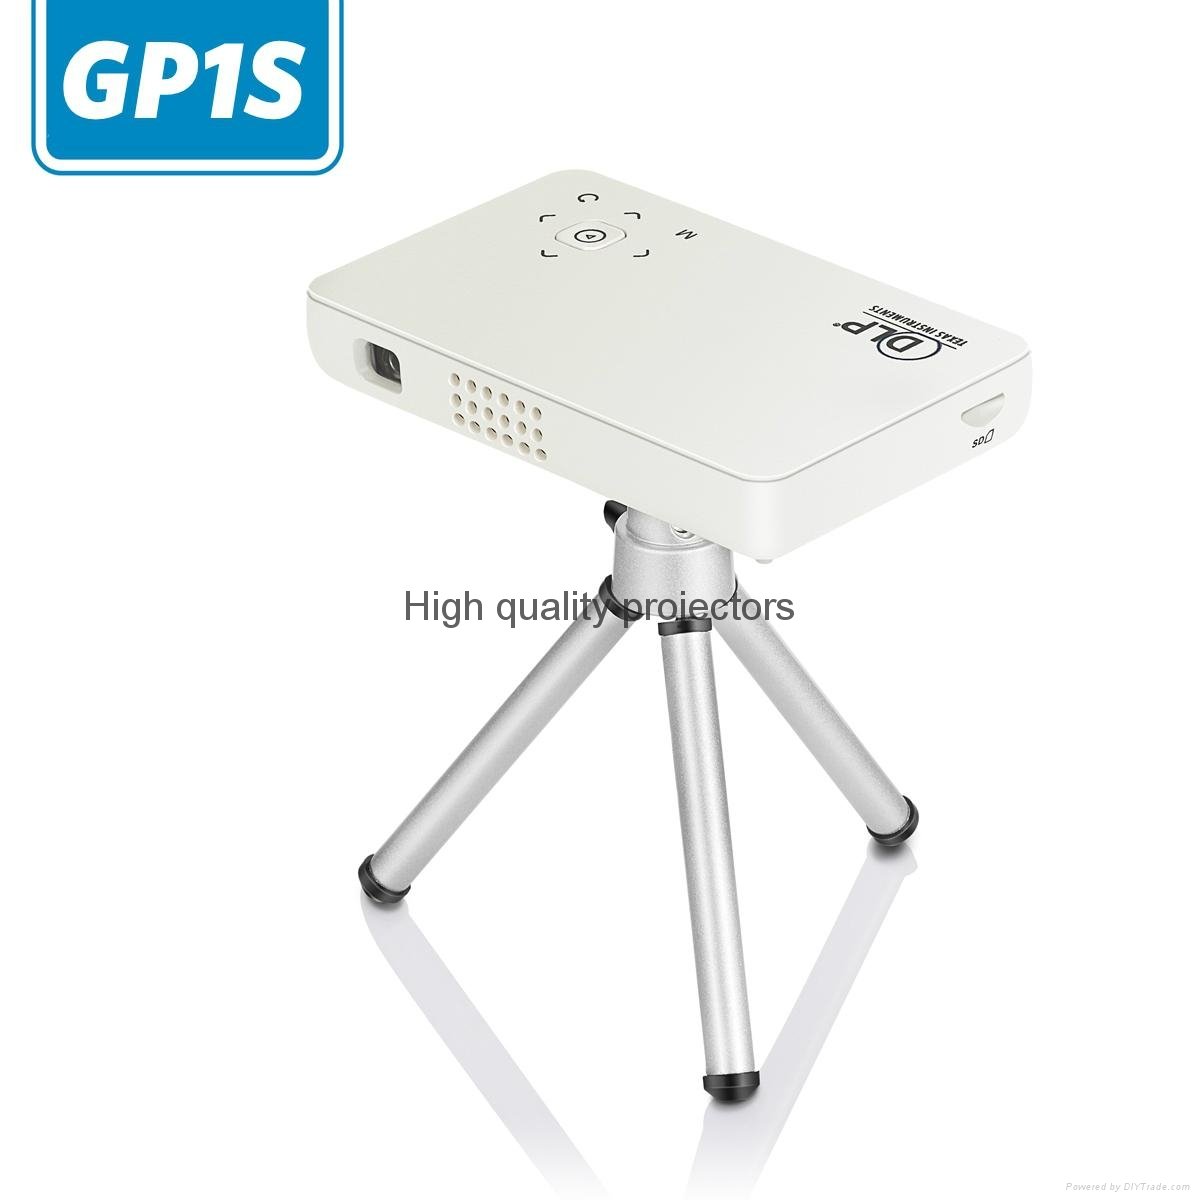 Simplebeamer GP1S DLP PICO led Projector